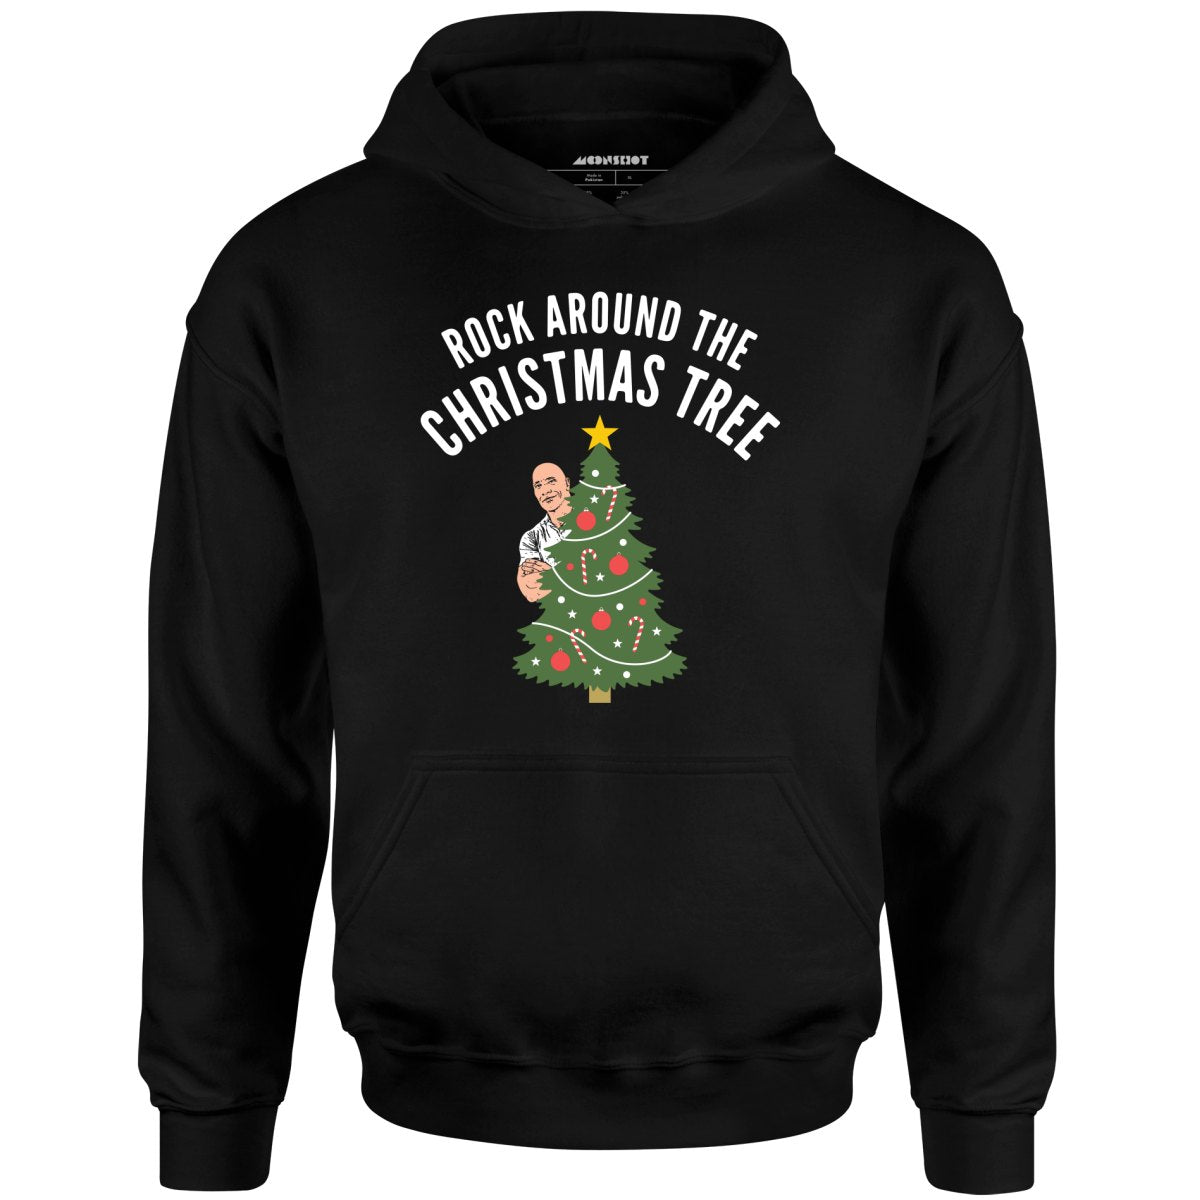 Rock Around the Christmas Tree - Unisex Hoodie